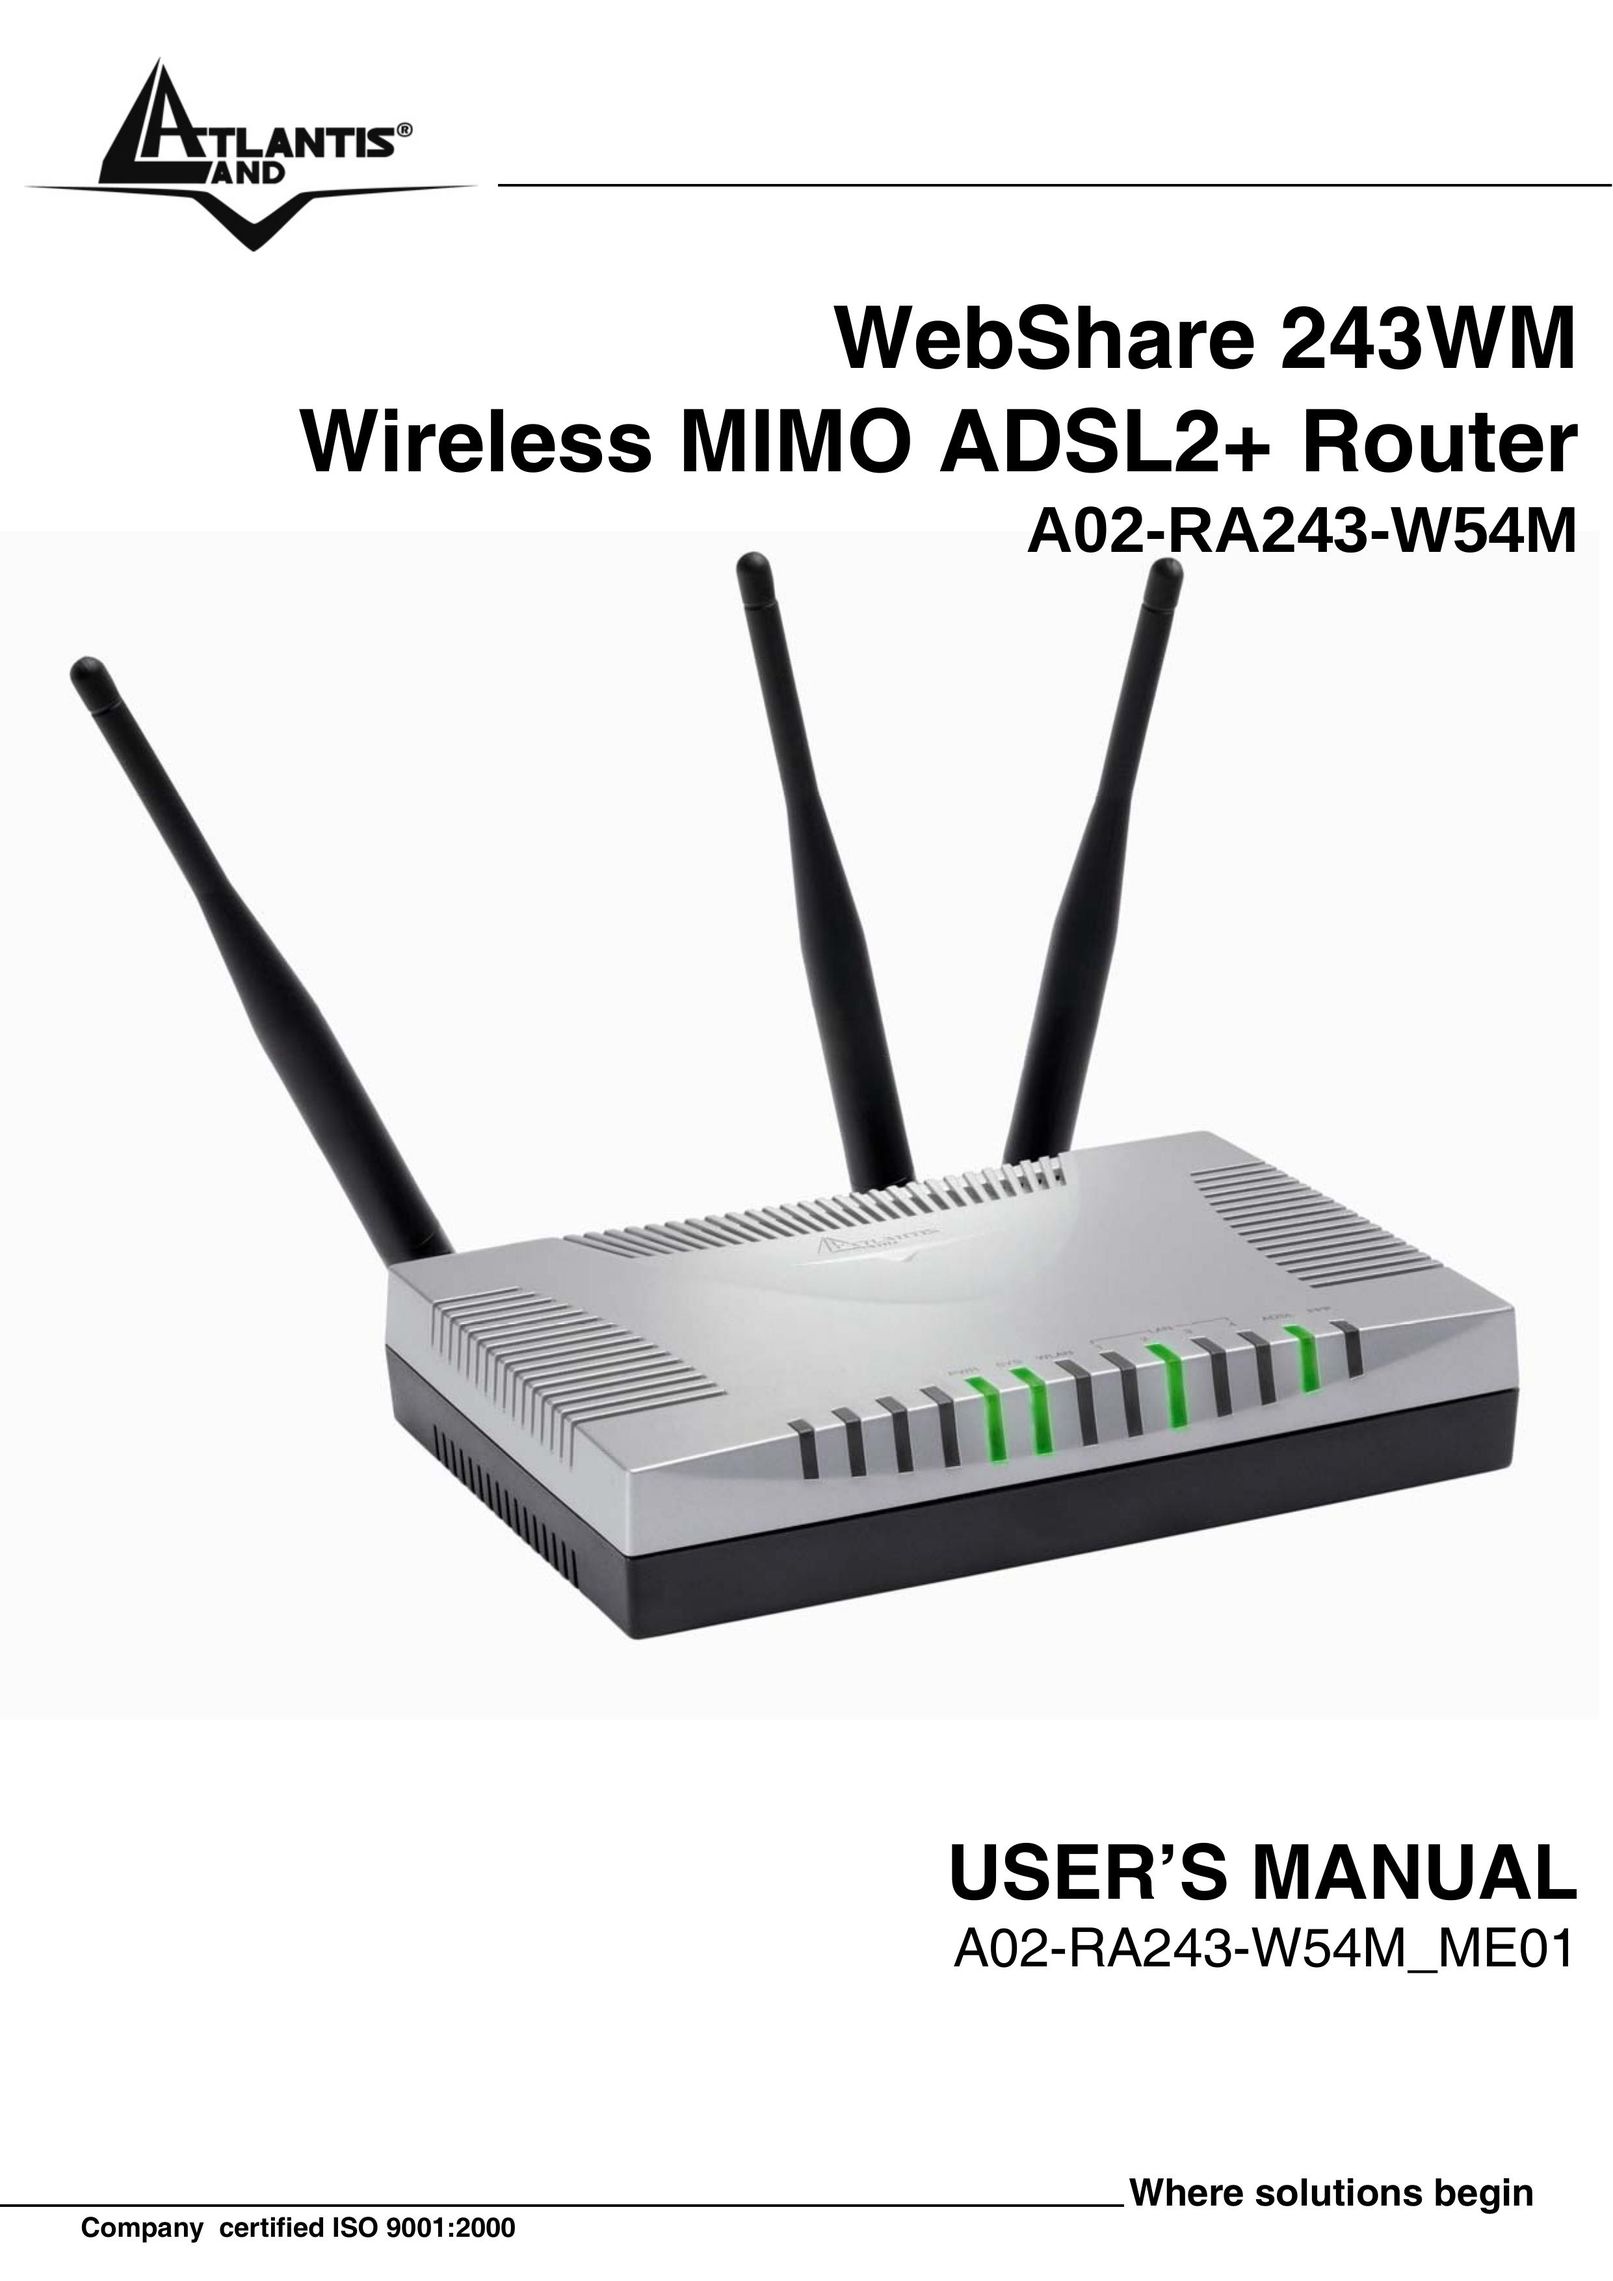 Atlantis Land A02-RA243-W54M Network Router User Manual